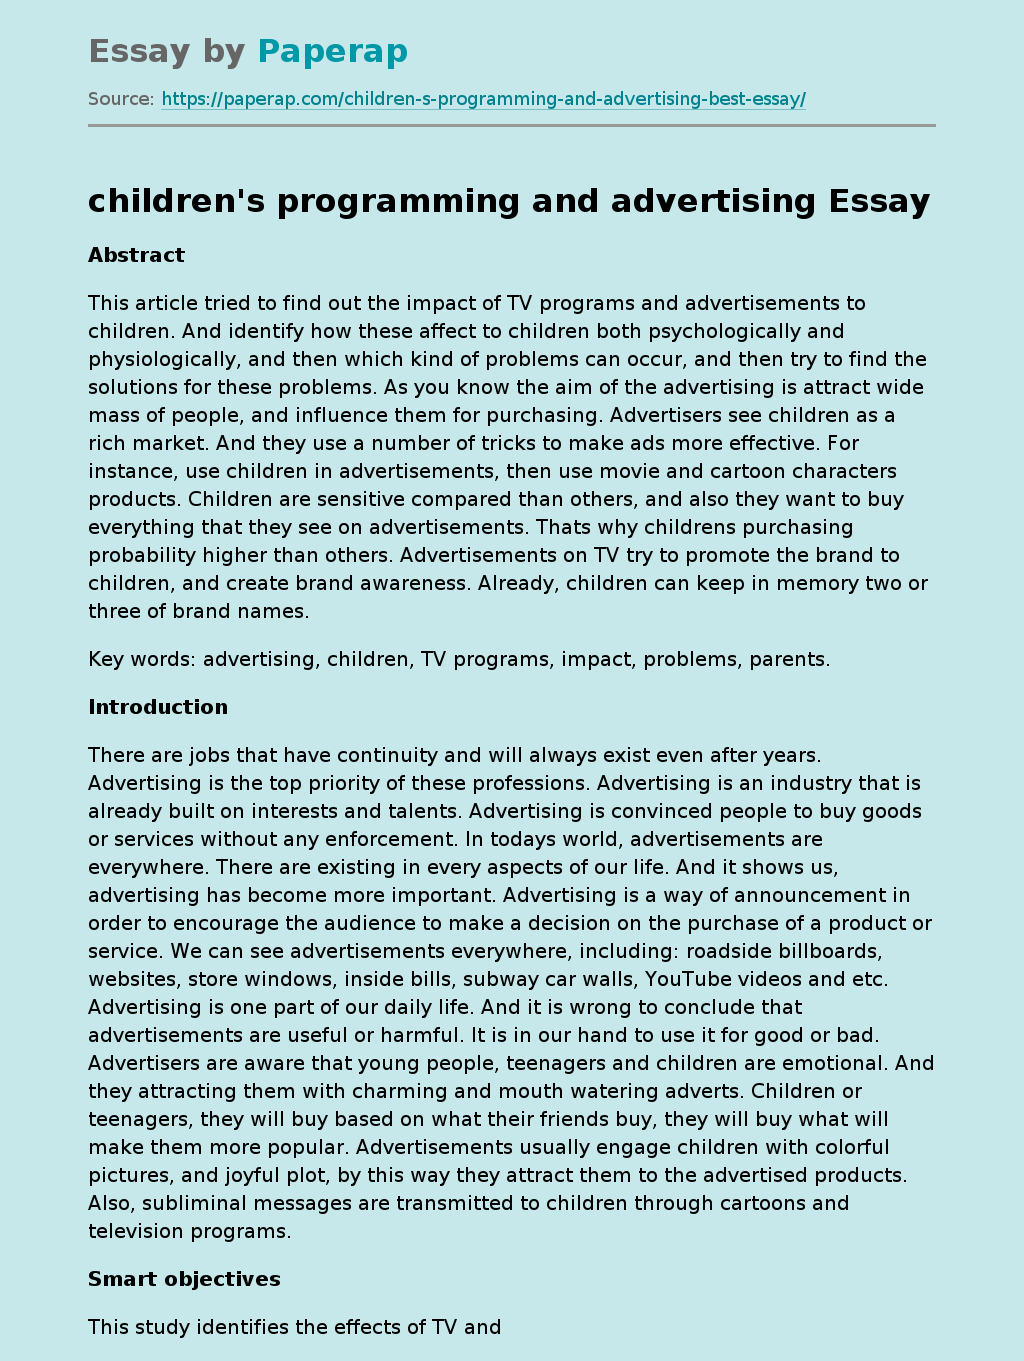 Children's Programming and Advertising